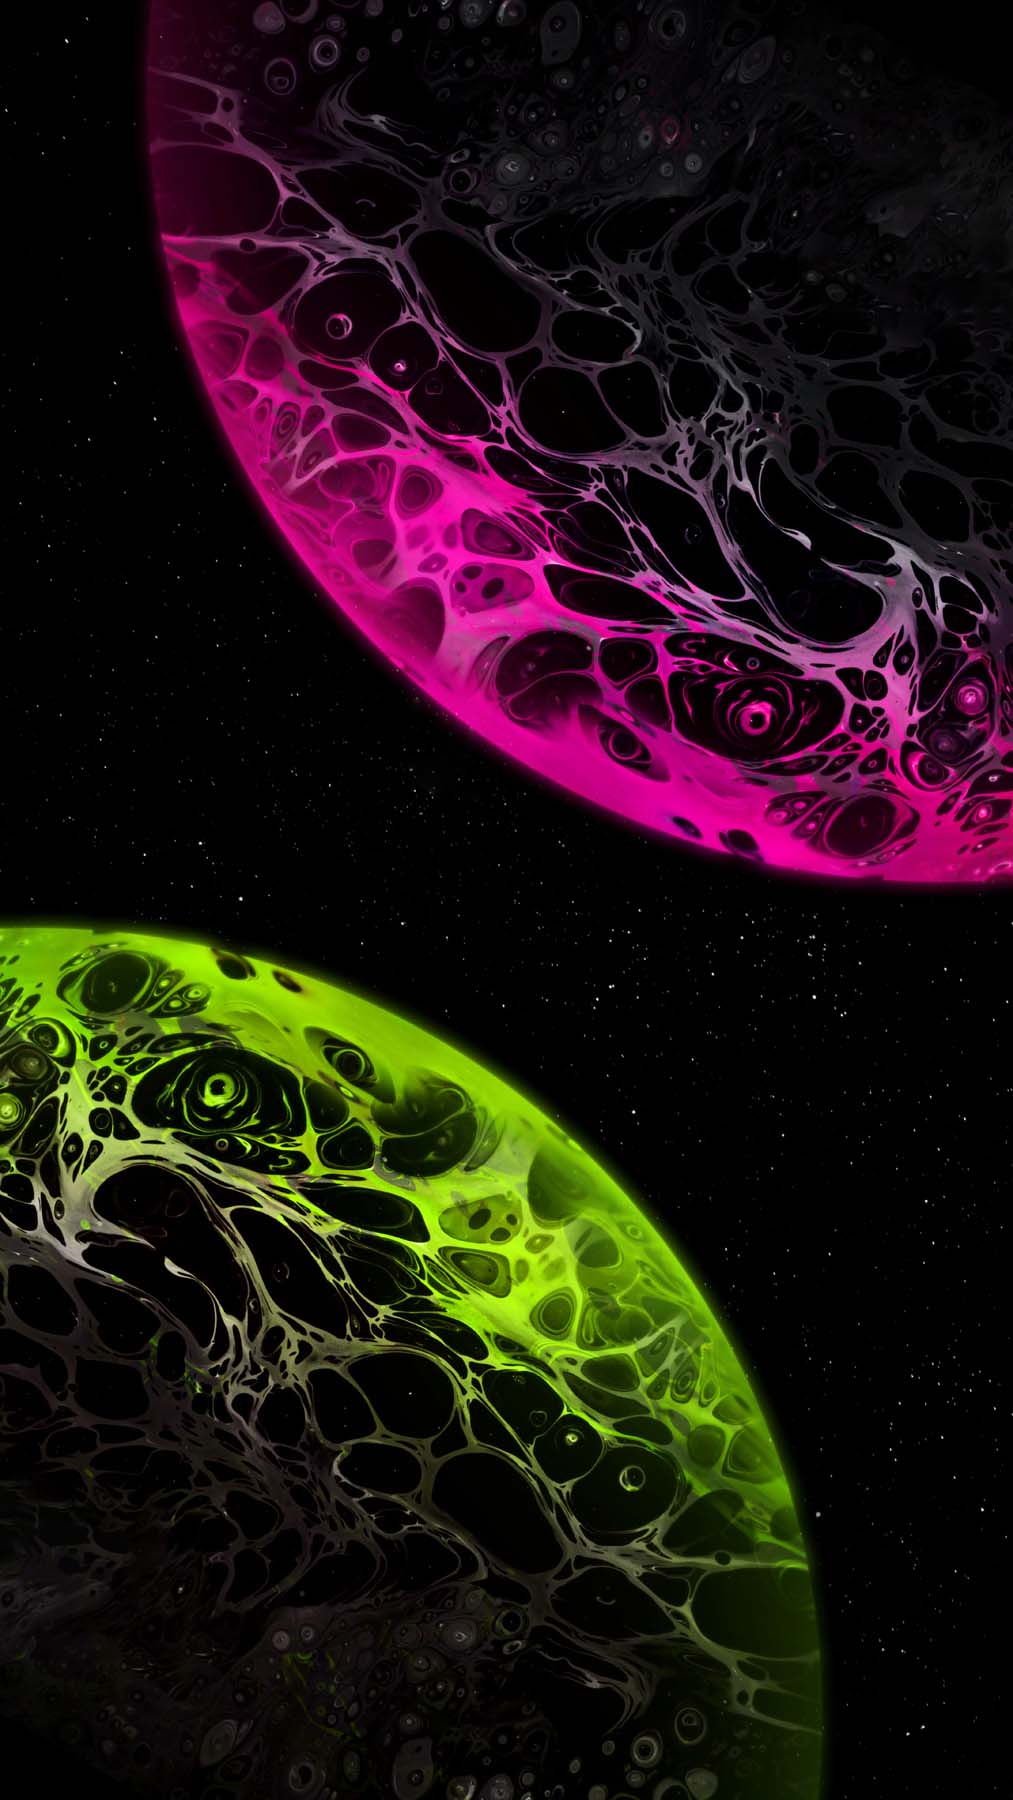 Alien Space Sphere iPhone Wallpaper HD